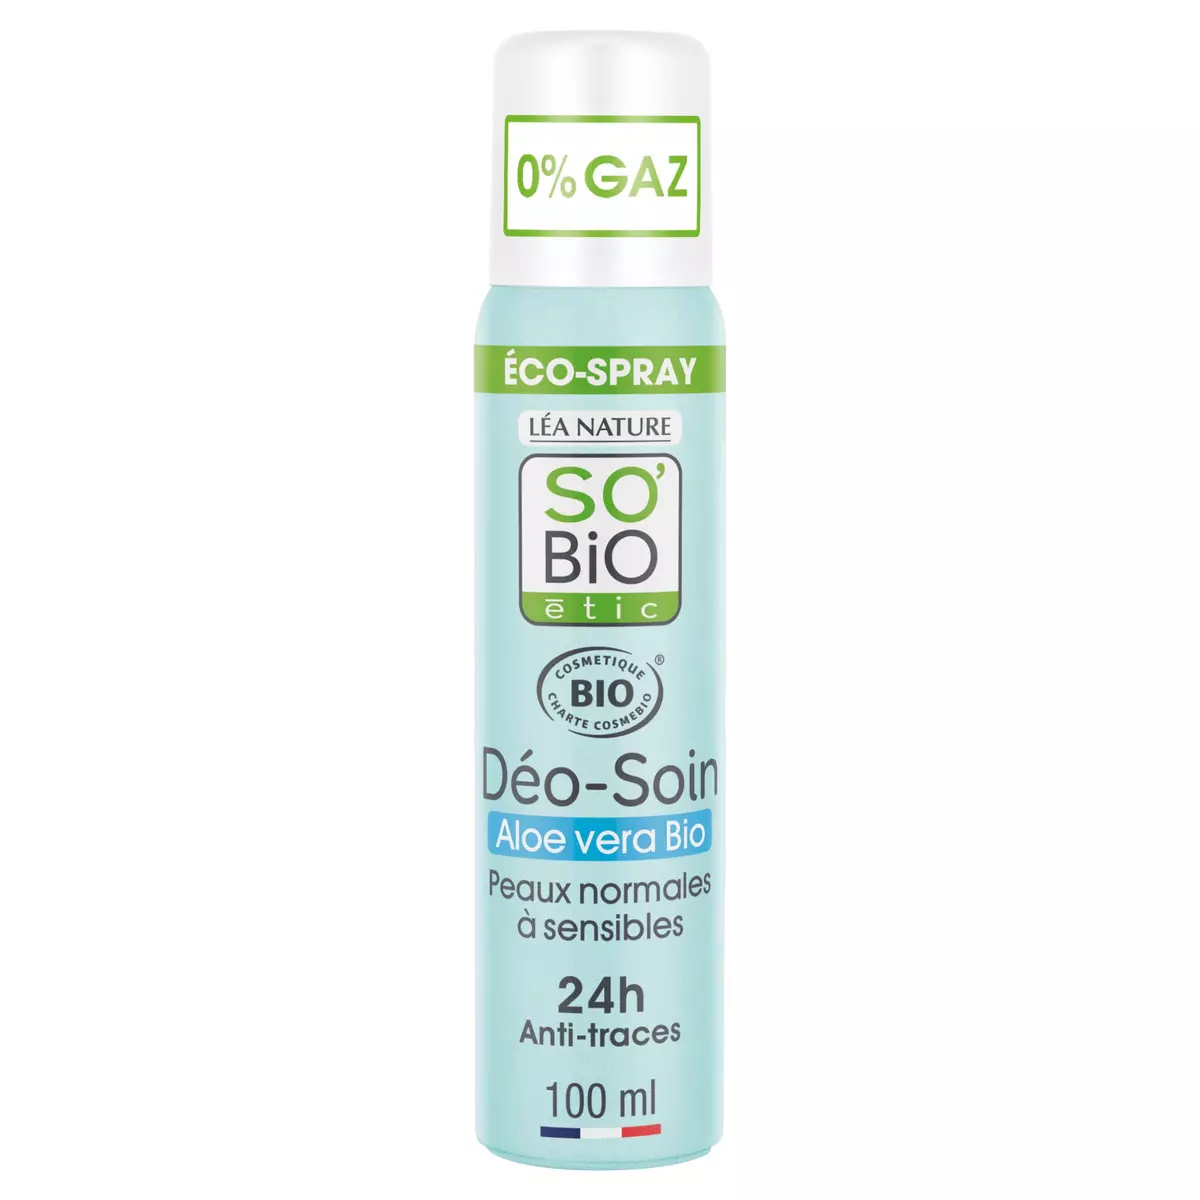 SO BIO ETIC Déodorant spray aloe vera bio anti-traces sans sels d'aluminium 100ml